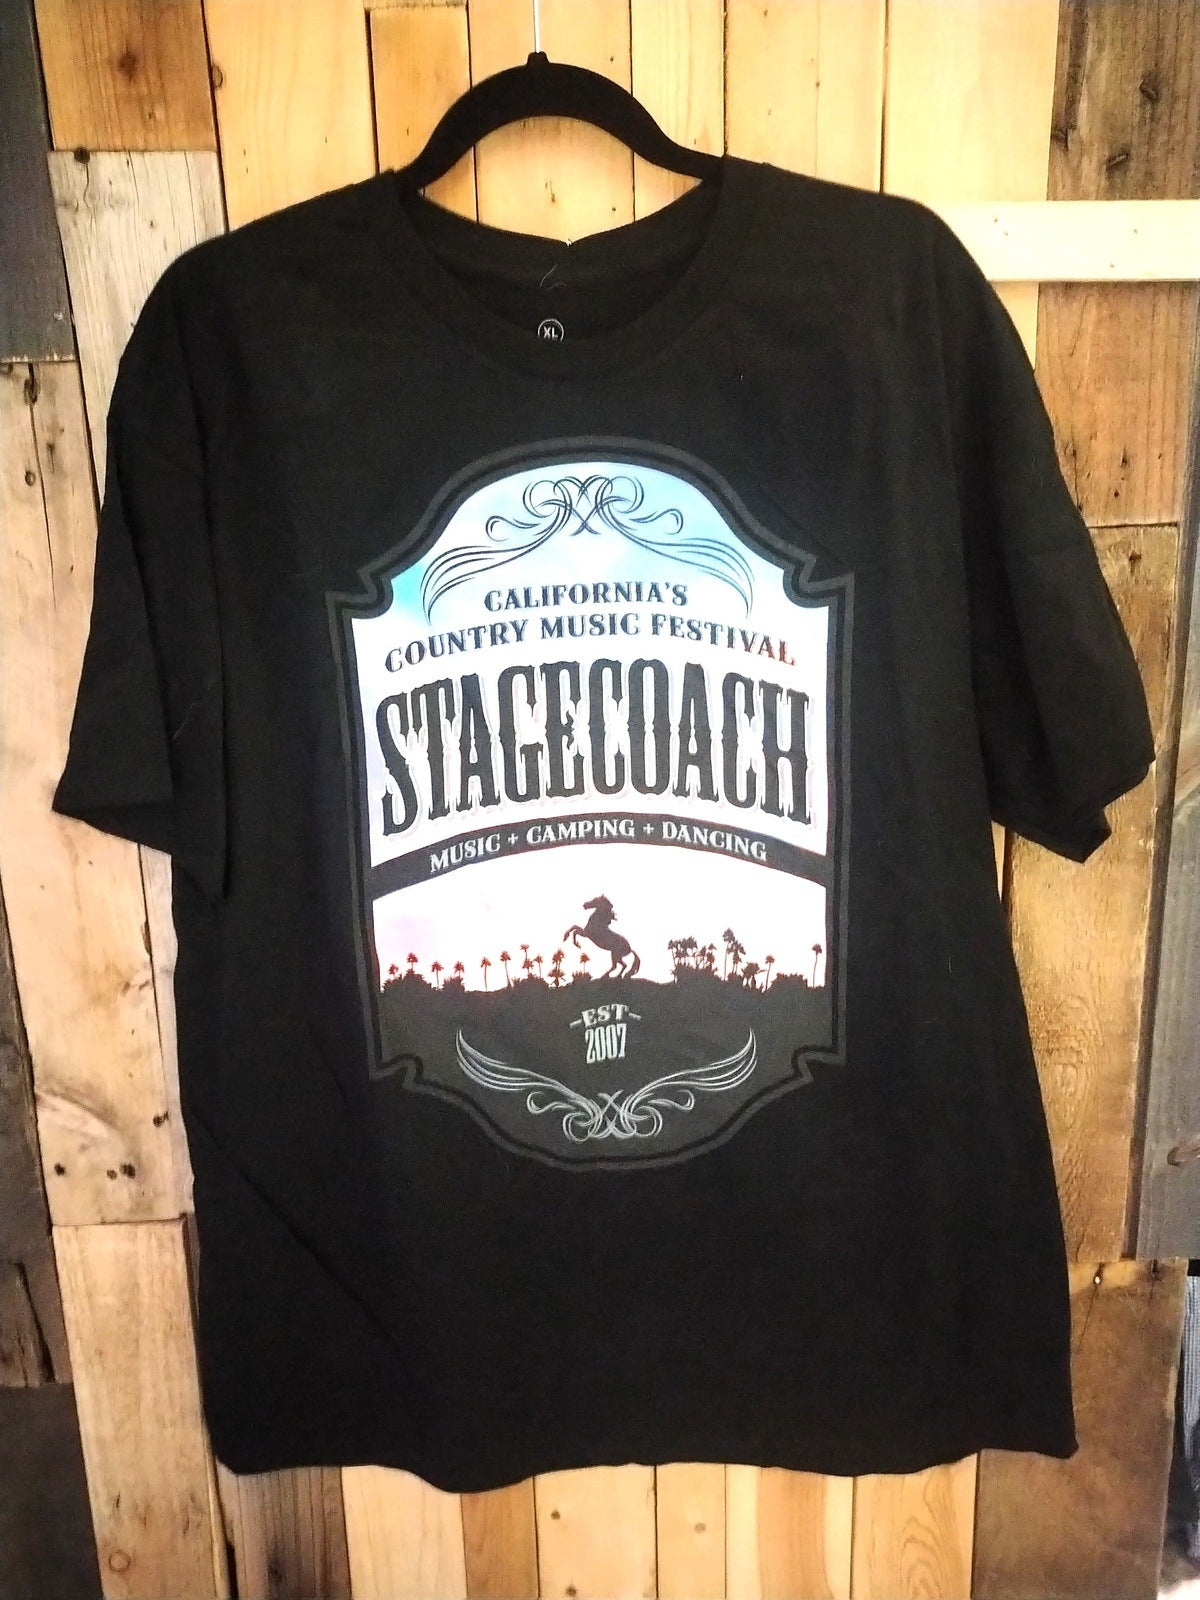 Stagecoach 2015 Official Merchandise Event T Shirt Size XL